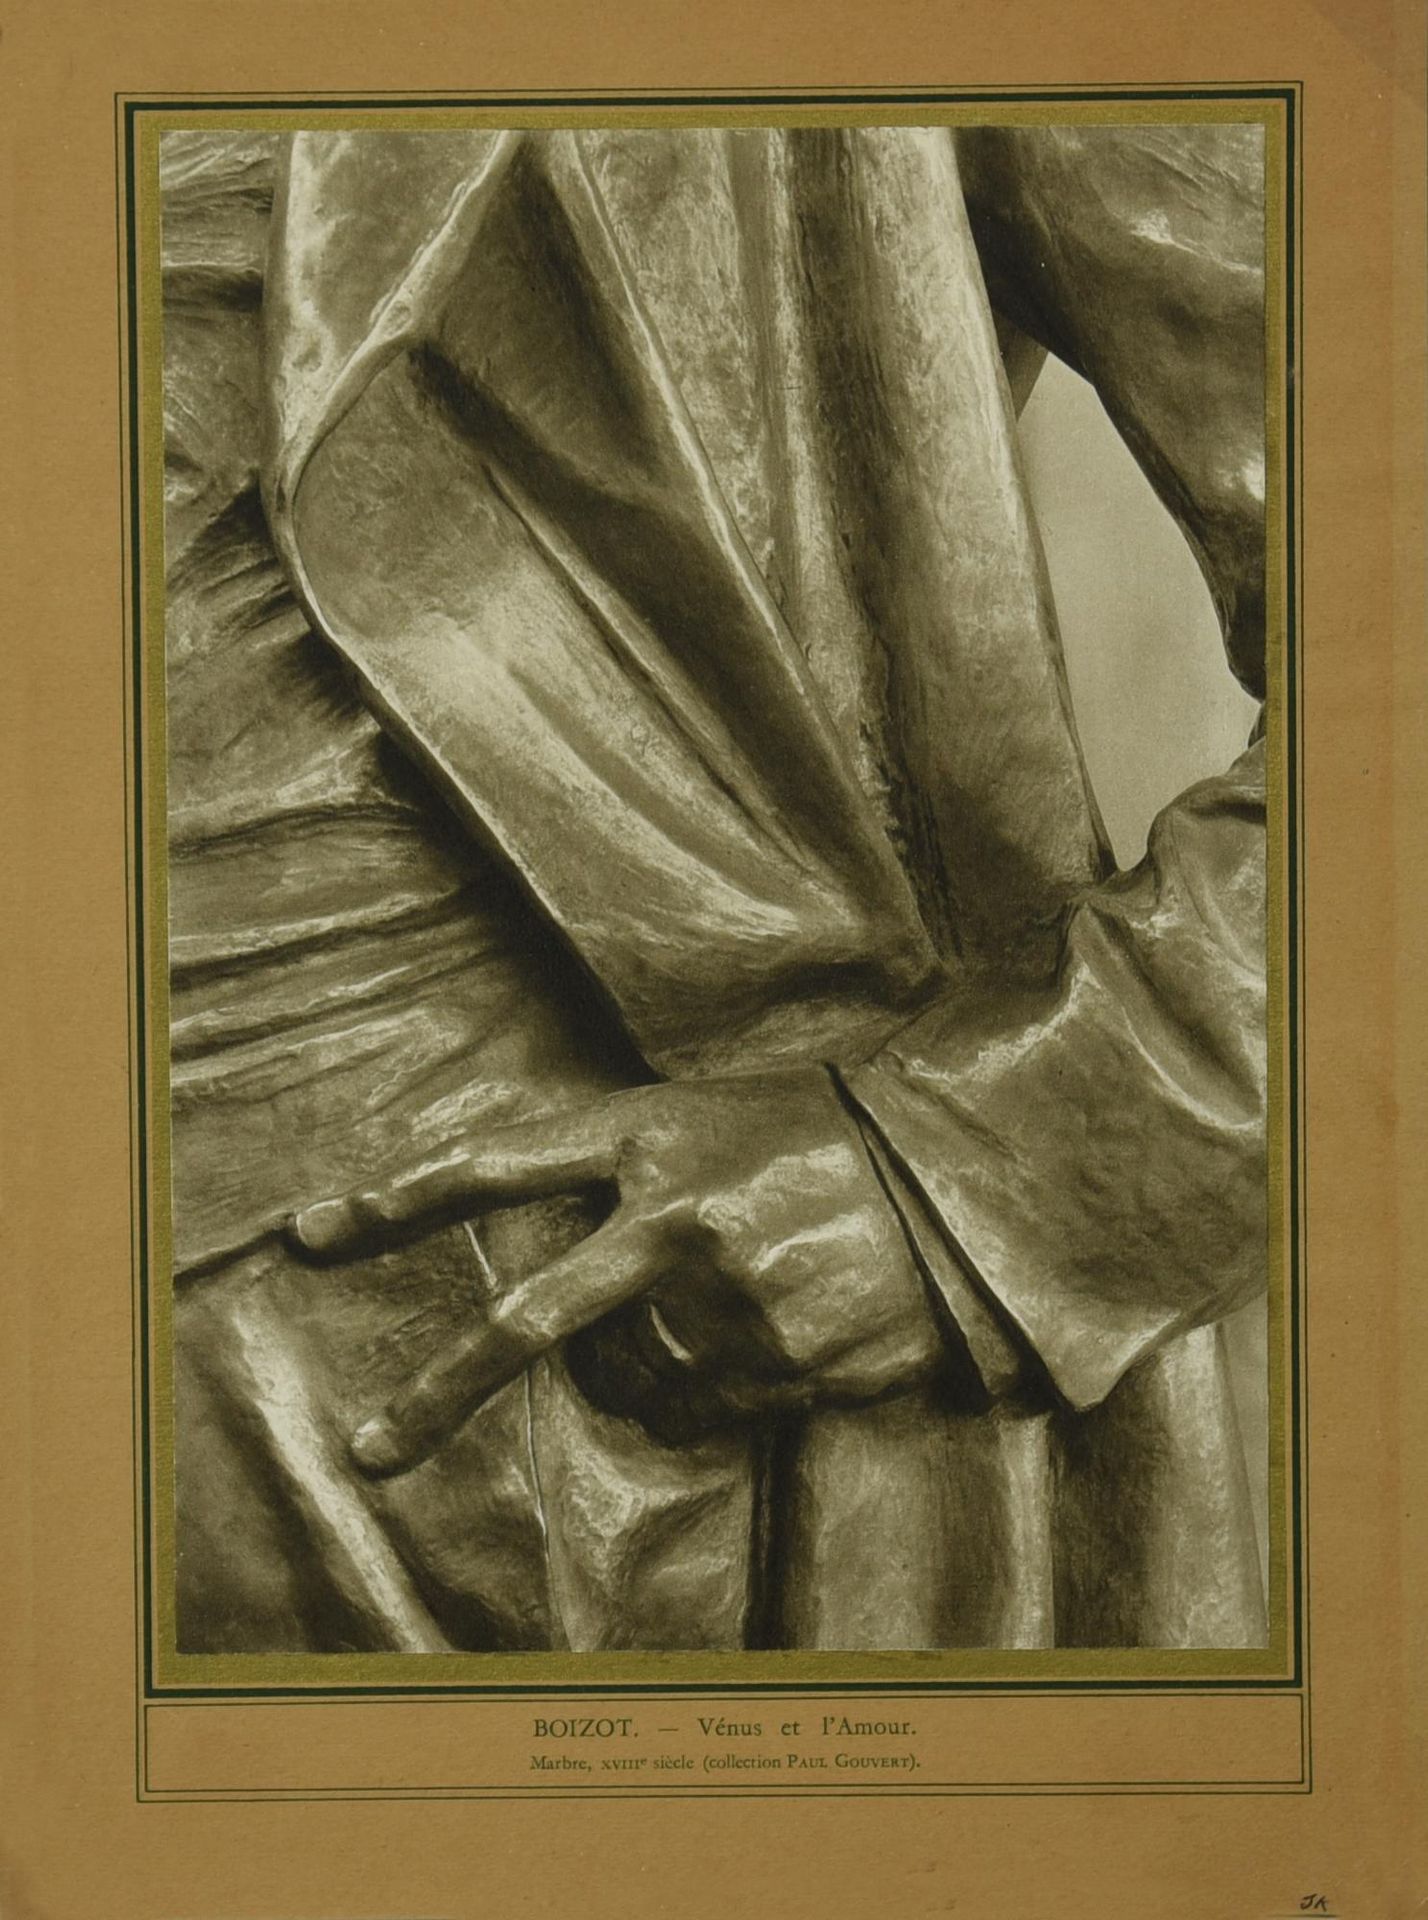 Jiri Kolar Jiri Kolar

BOIZOT VENUS ET L'AMOUR

Collage auf Papier, 26,7x36 cm

&hellip;